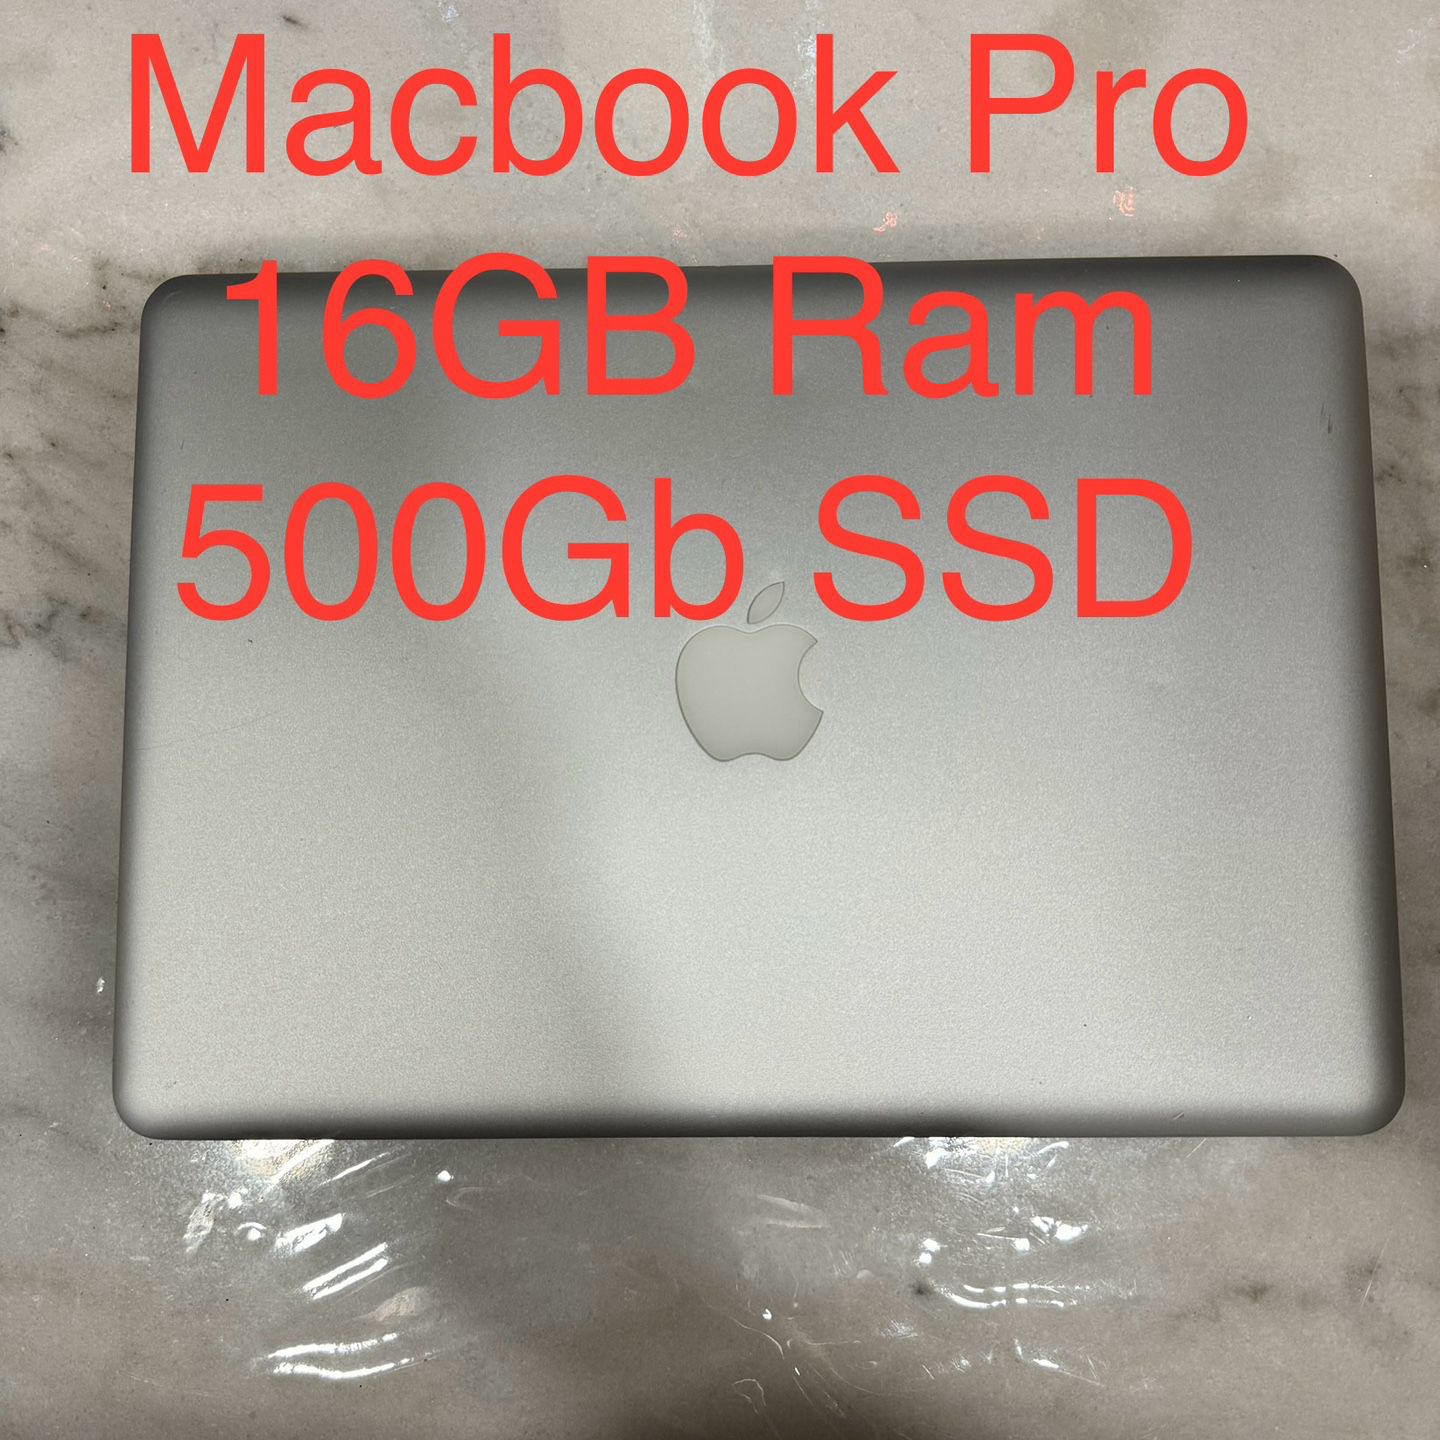 Upgraded Macbook Pro, 16GB Ram, 500Gb SSD, New Battery